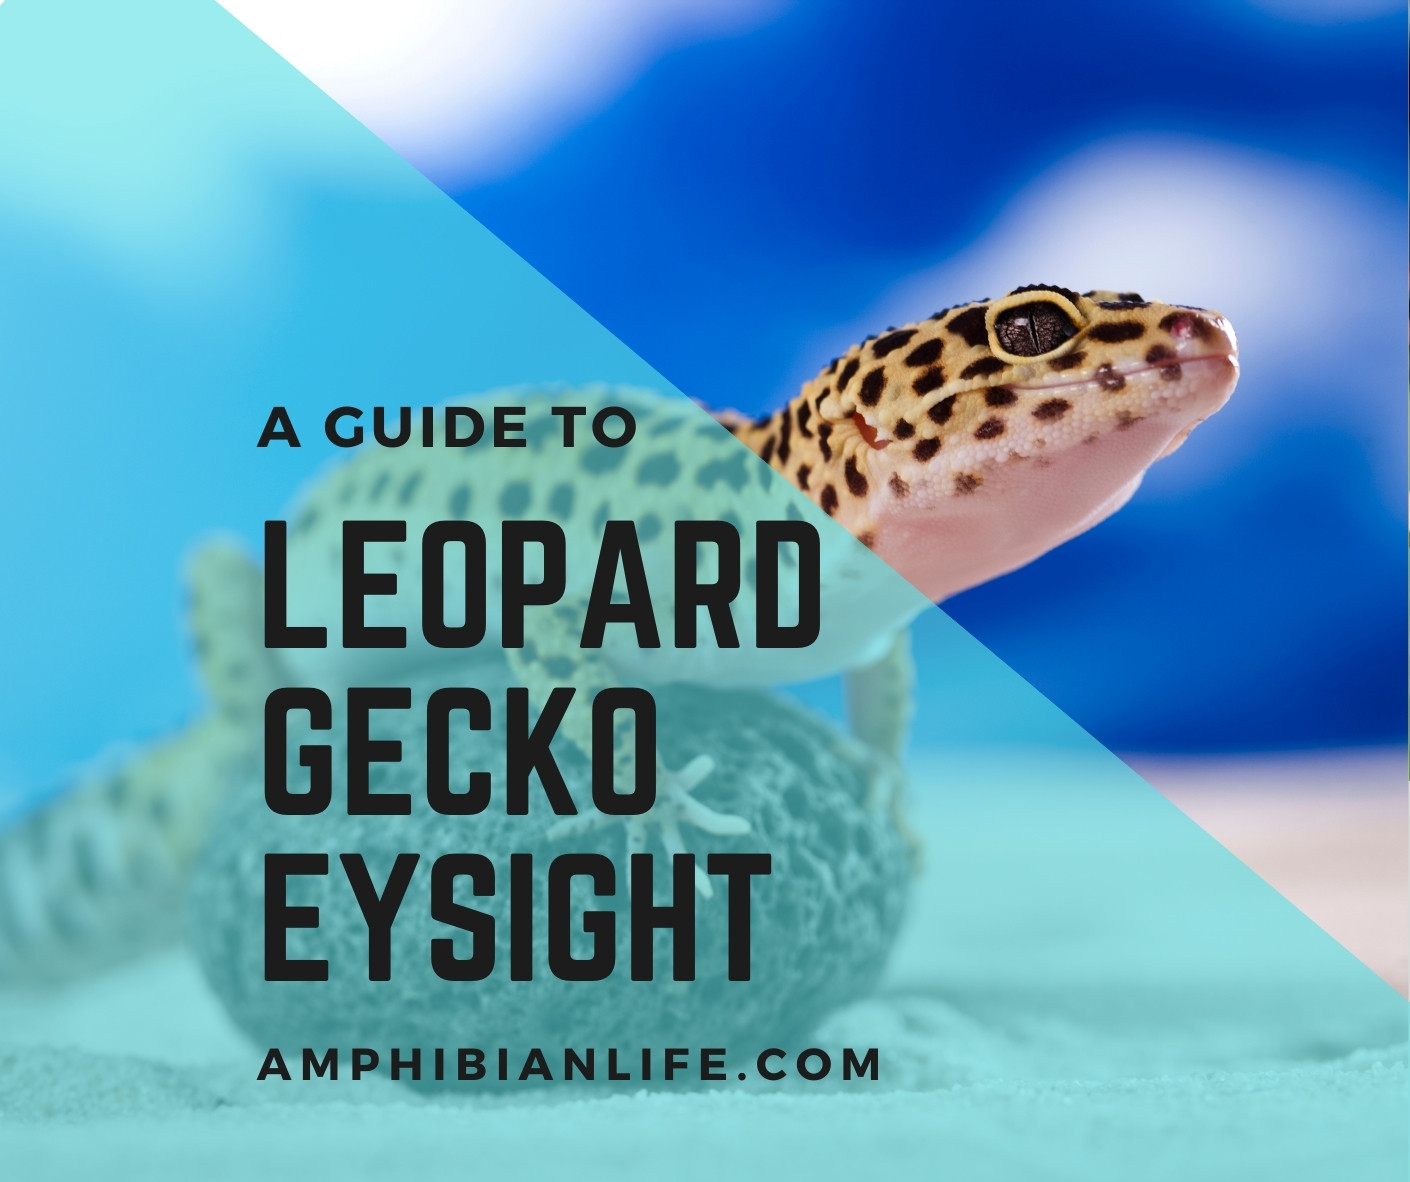 How Good Is Leopard Gecko Eyesight?